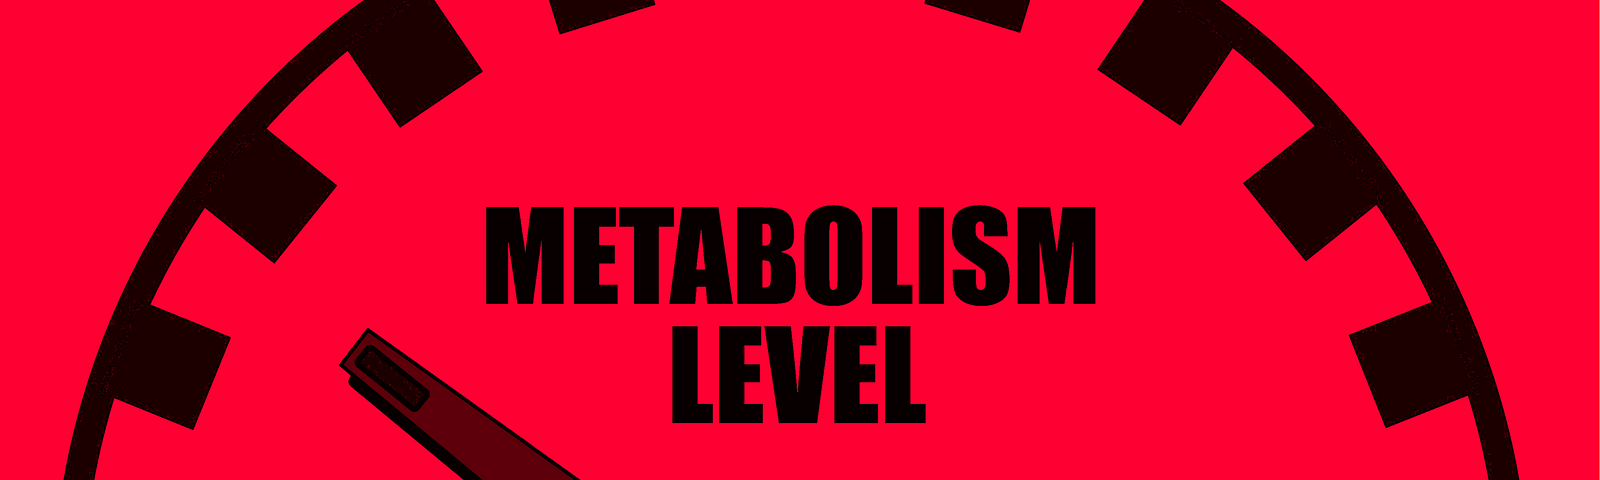 healthy metabolism